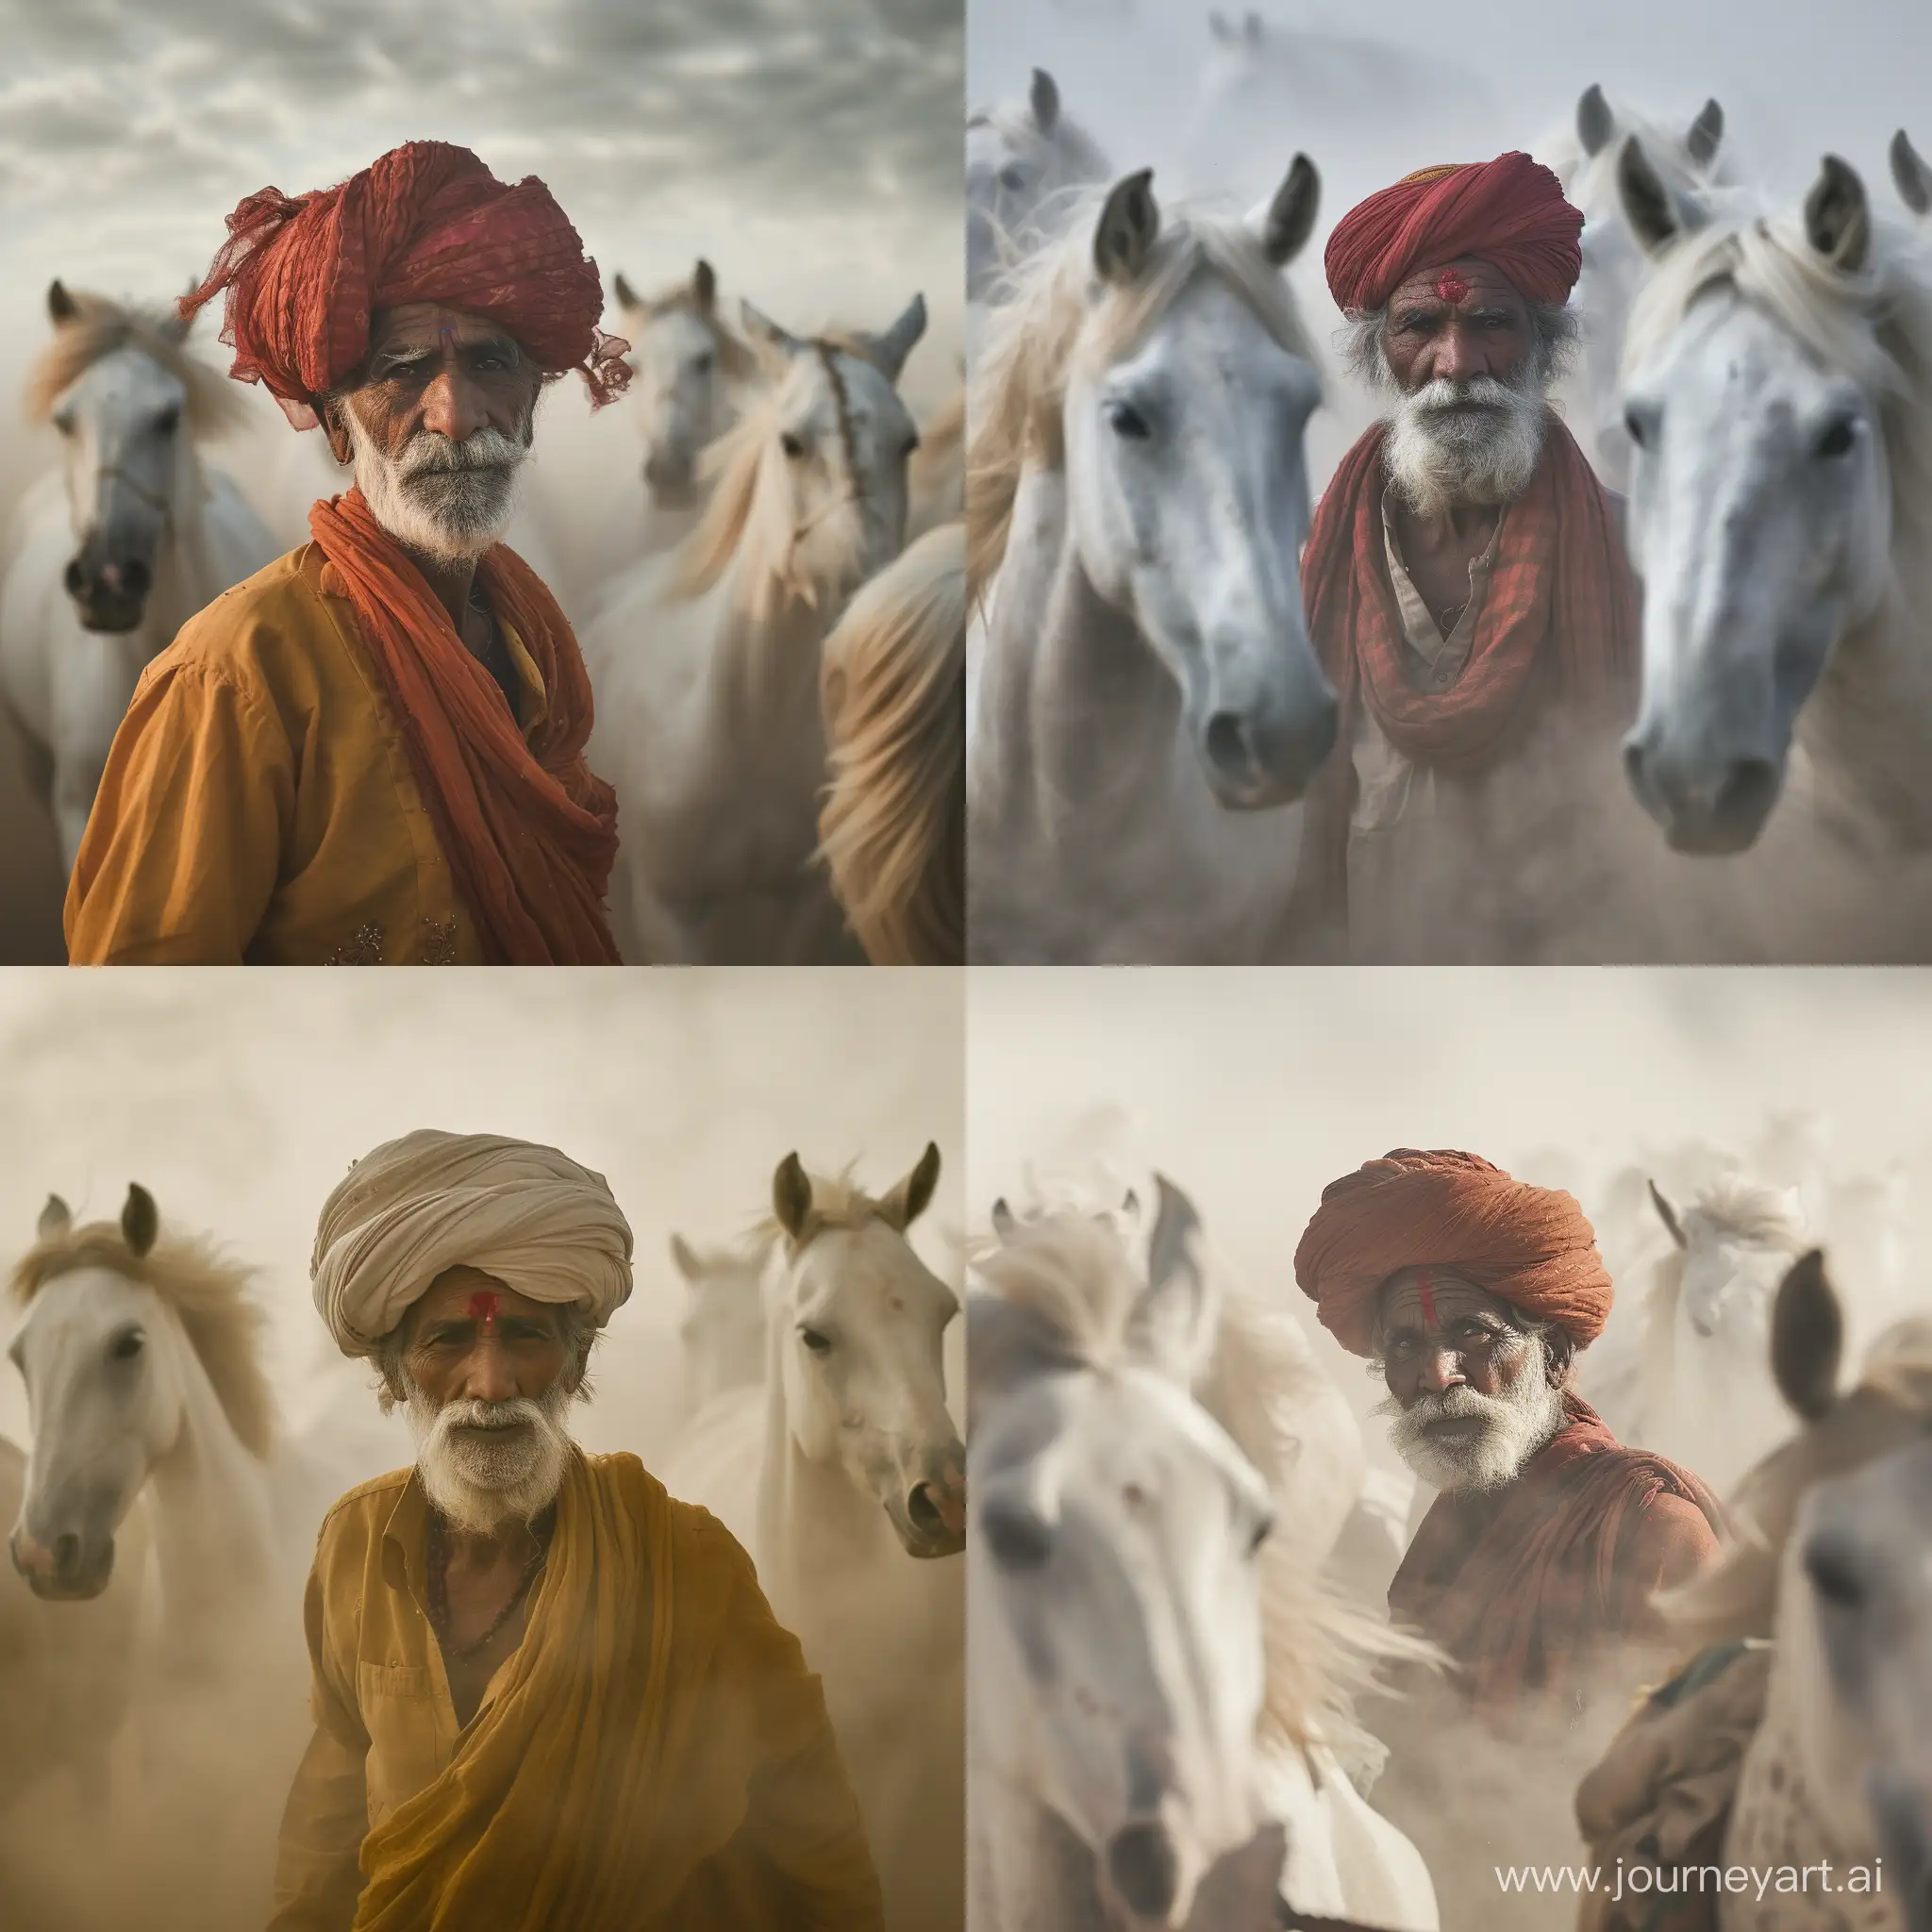 Rajasthani-Elderly-Rabari-Amidst-Galloping-White-Horses-in-Dusty-Terrain